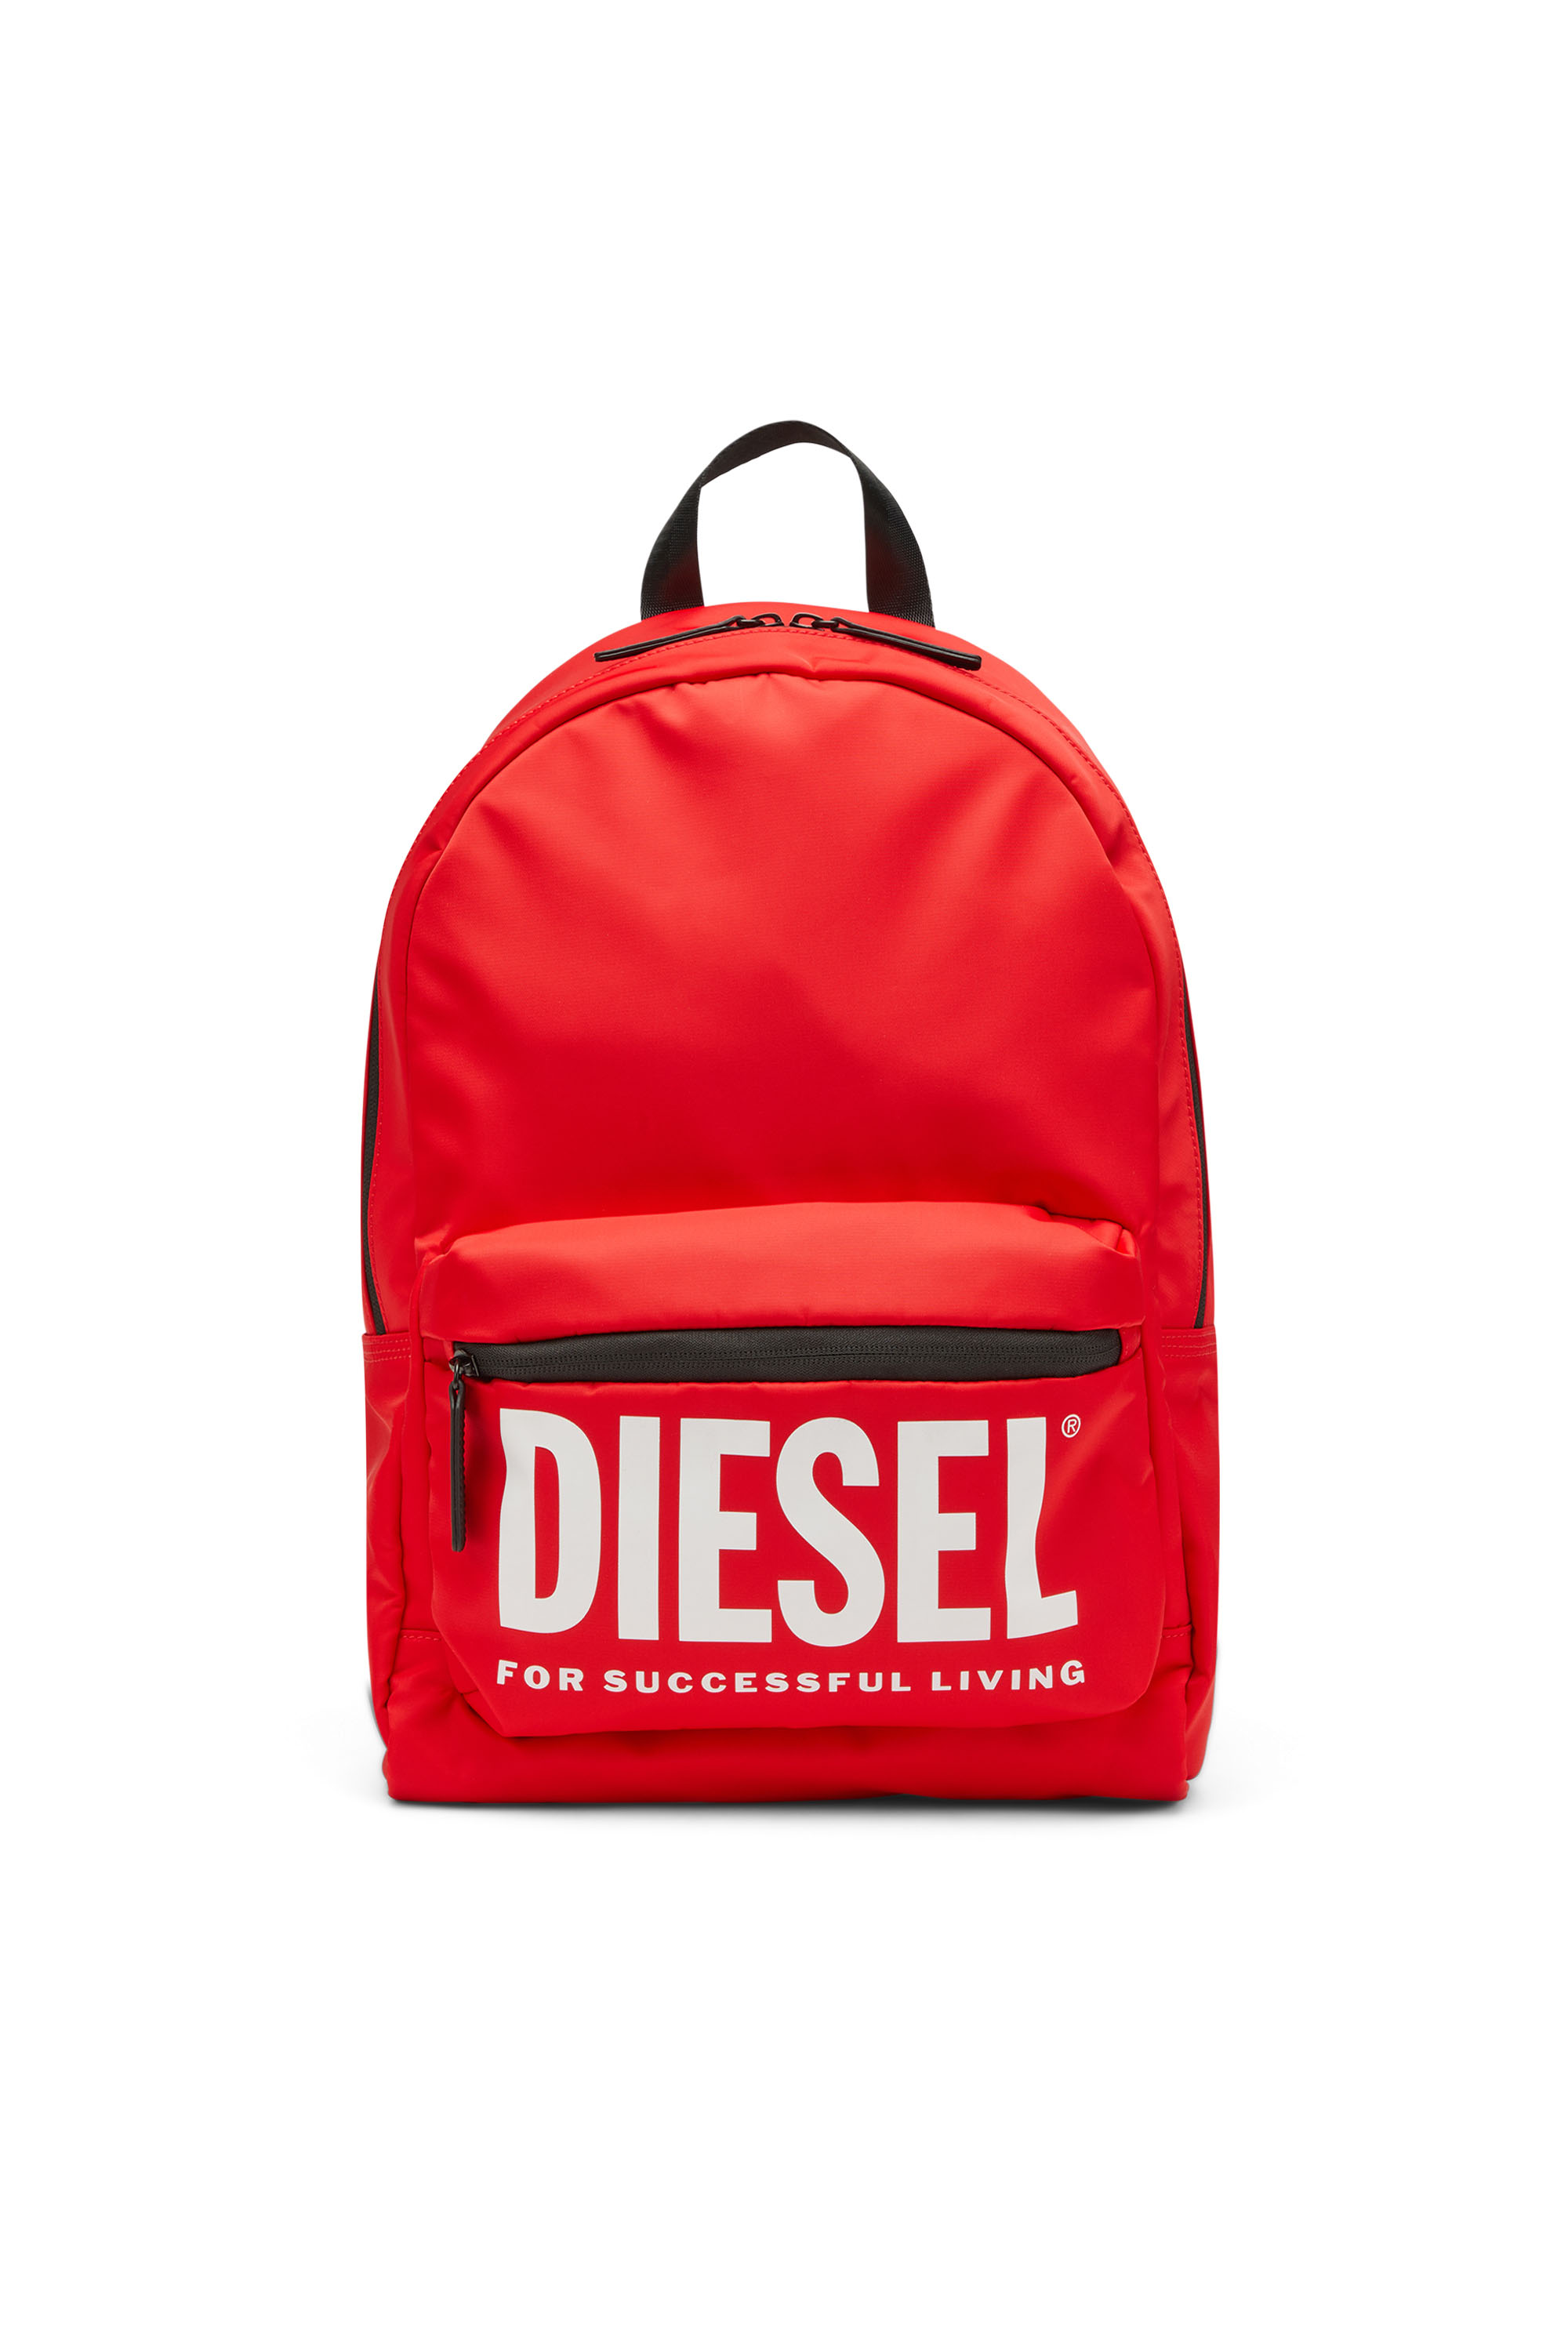 Diesel - WBACKLOGO, Red - Image 1